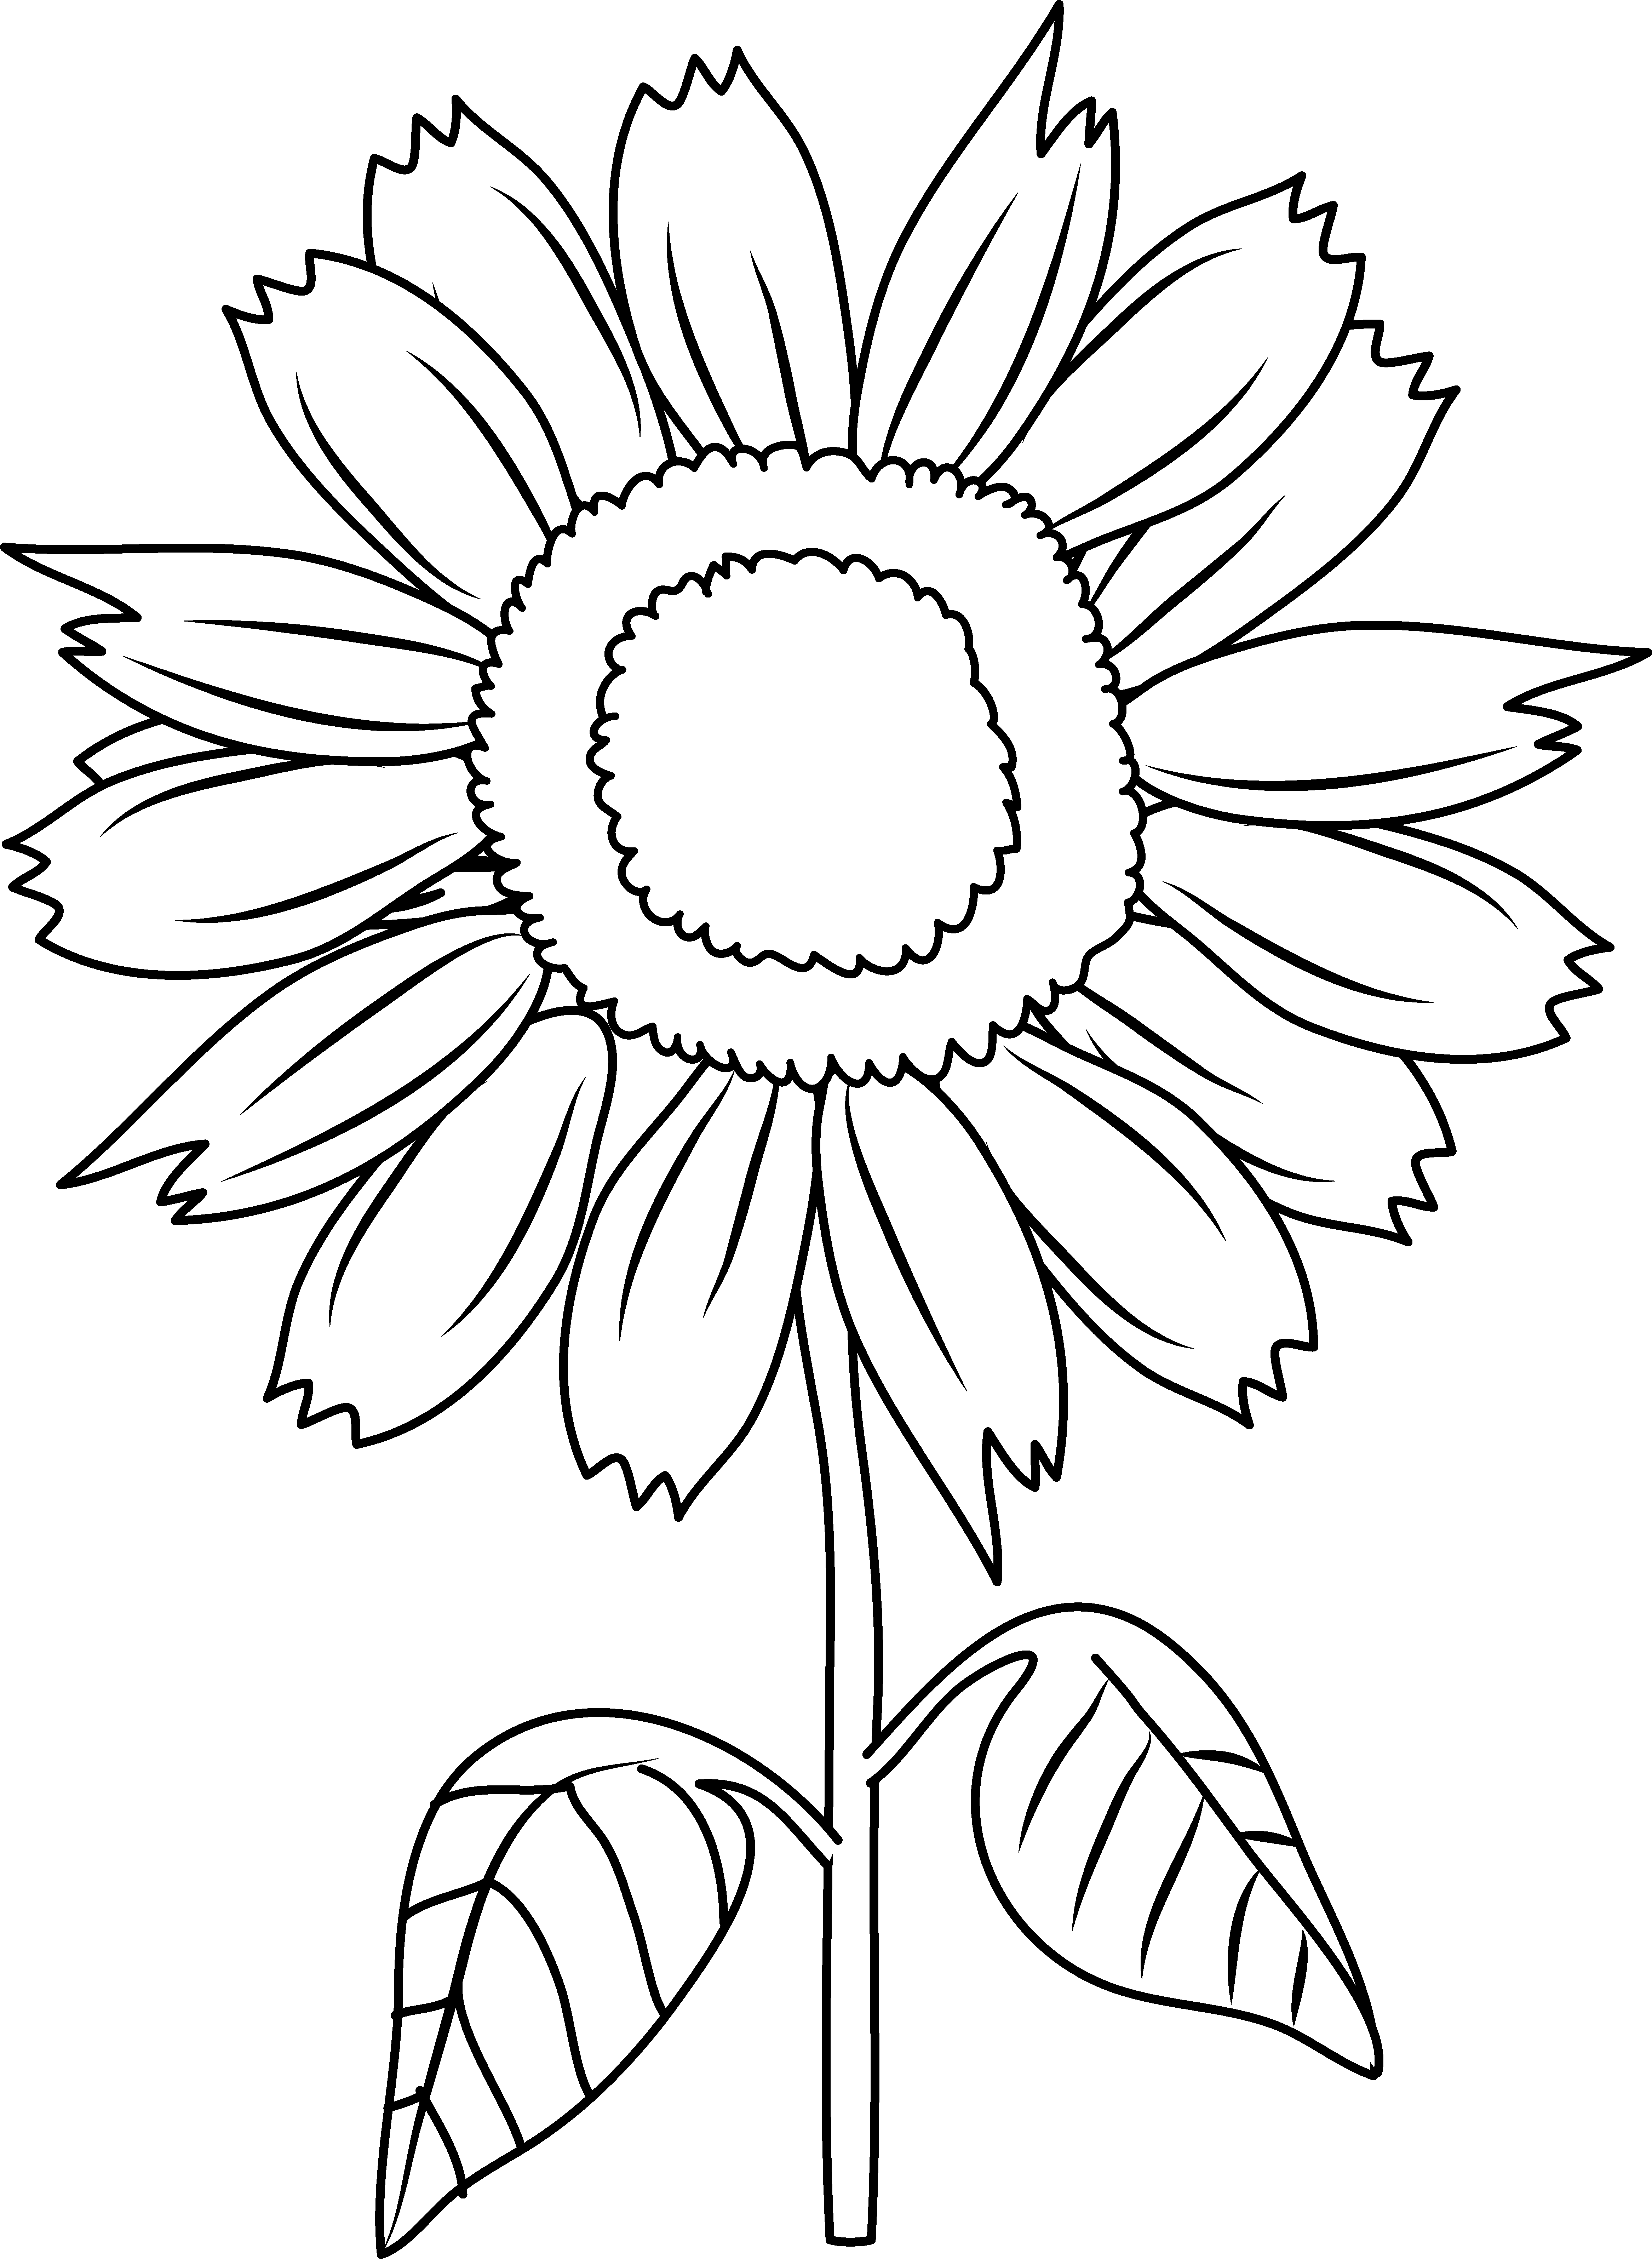 Free Sunflower Line Art Download Free Clip Art Free Clip